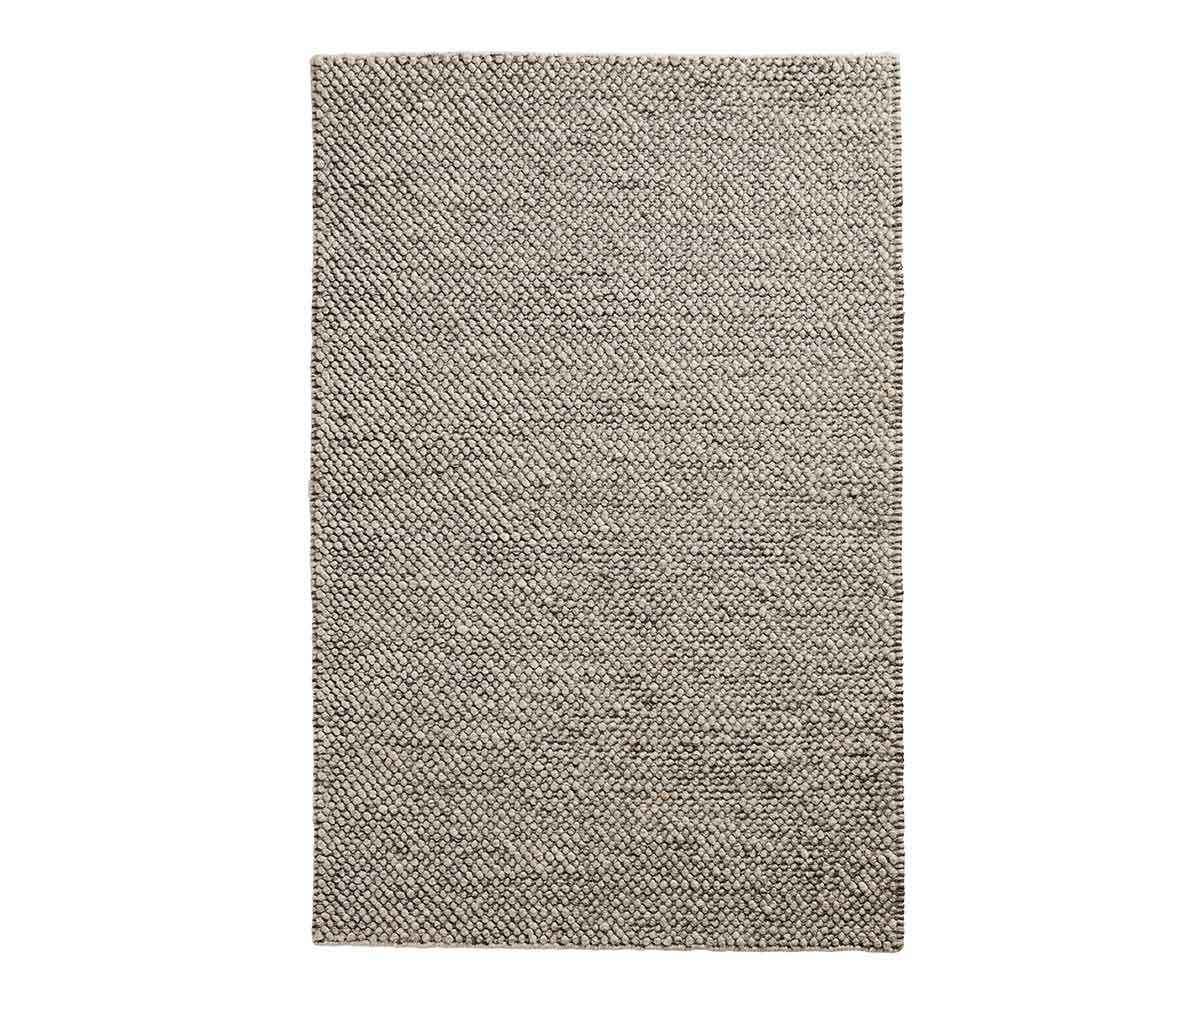 Woud Tact-matto dark grey, 200 x 300 cm